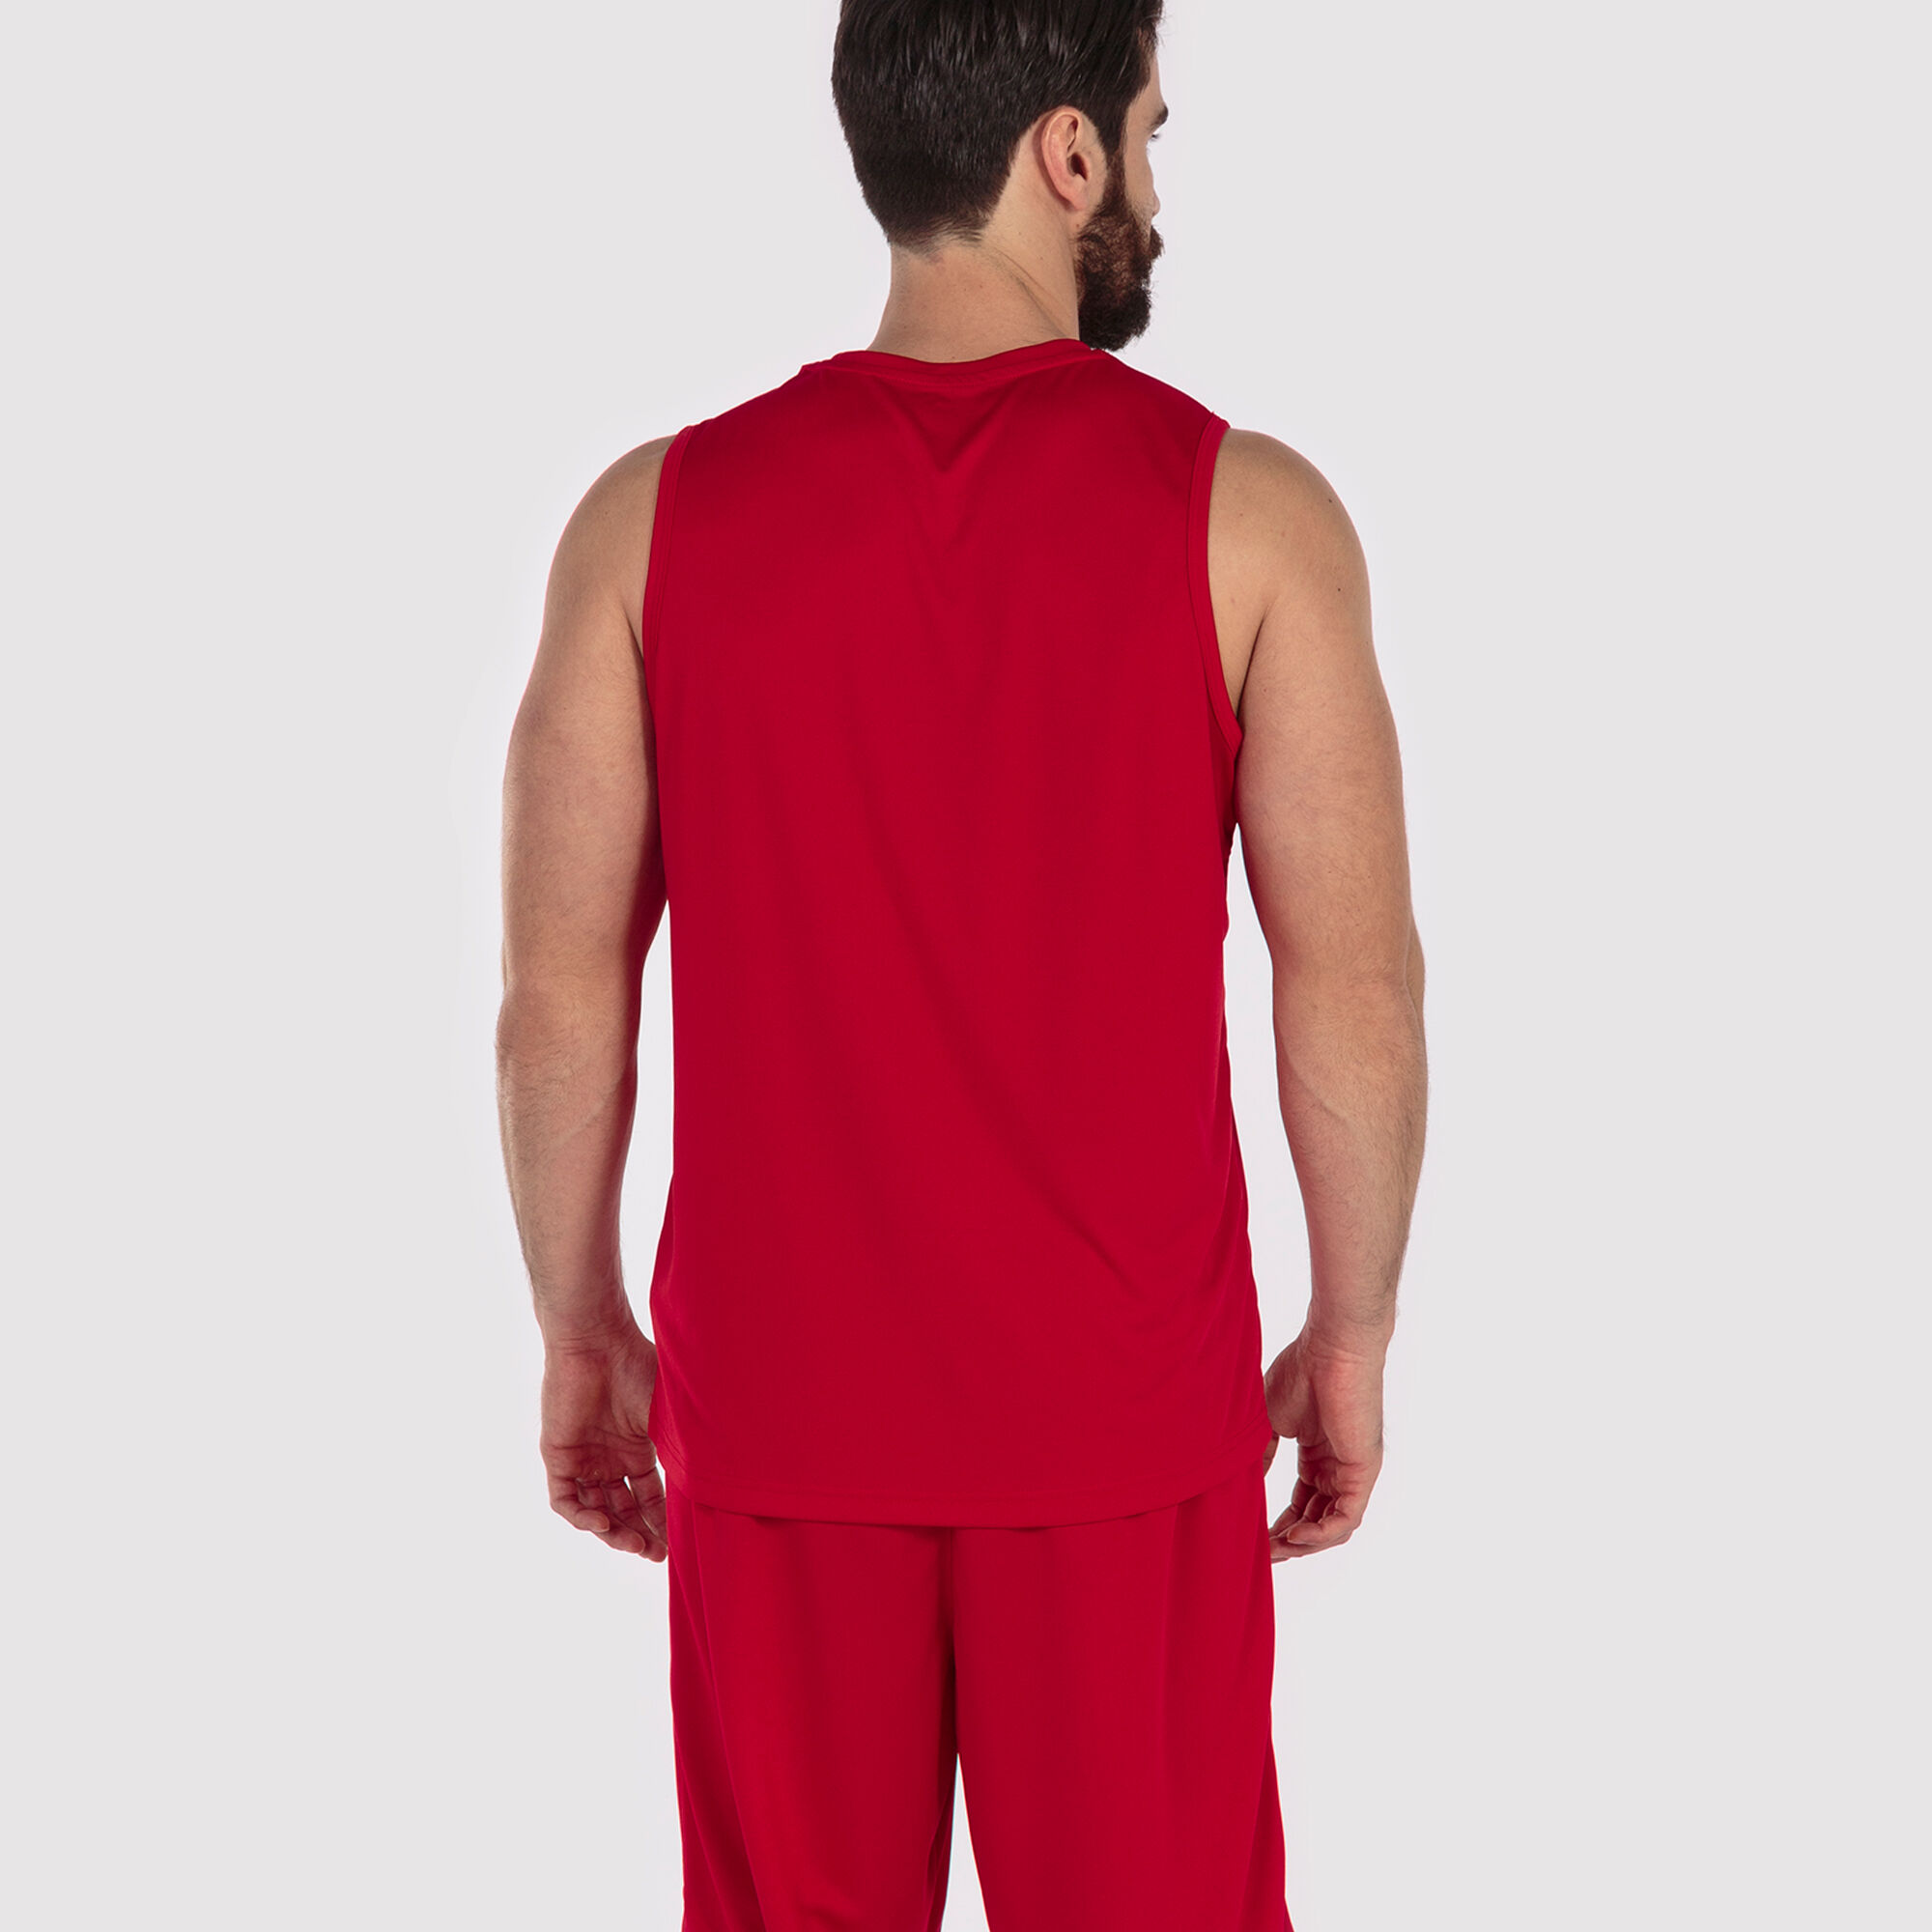 Camiseta sin mangas hombre Combi Basket rojo